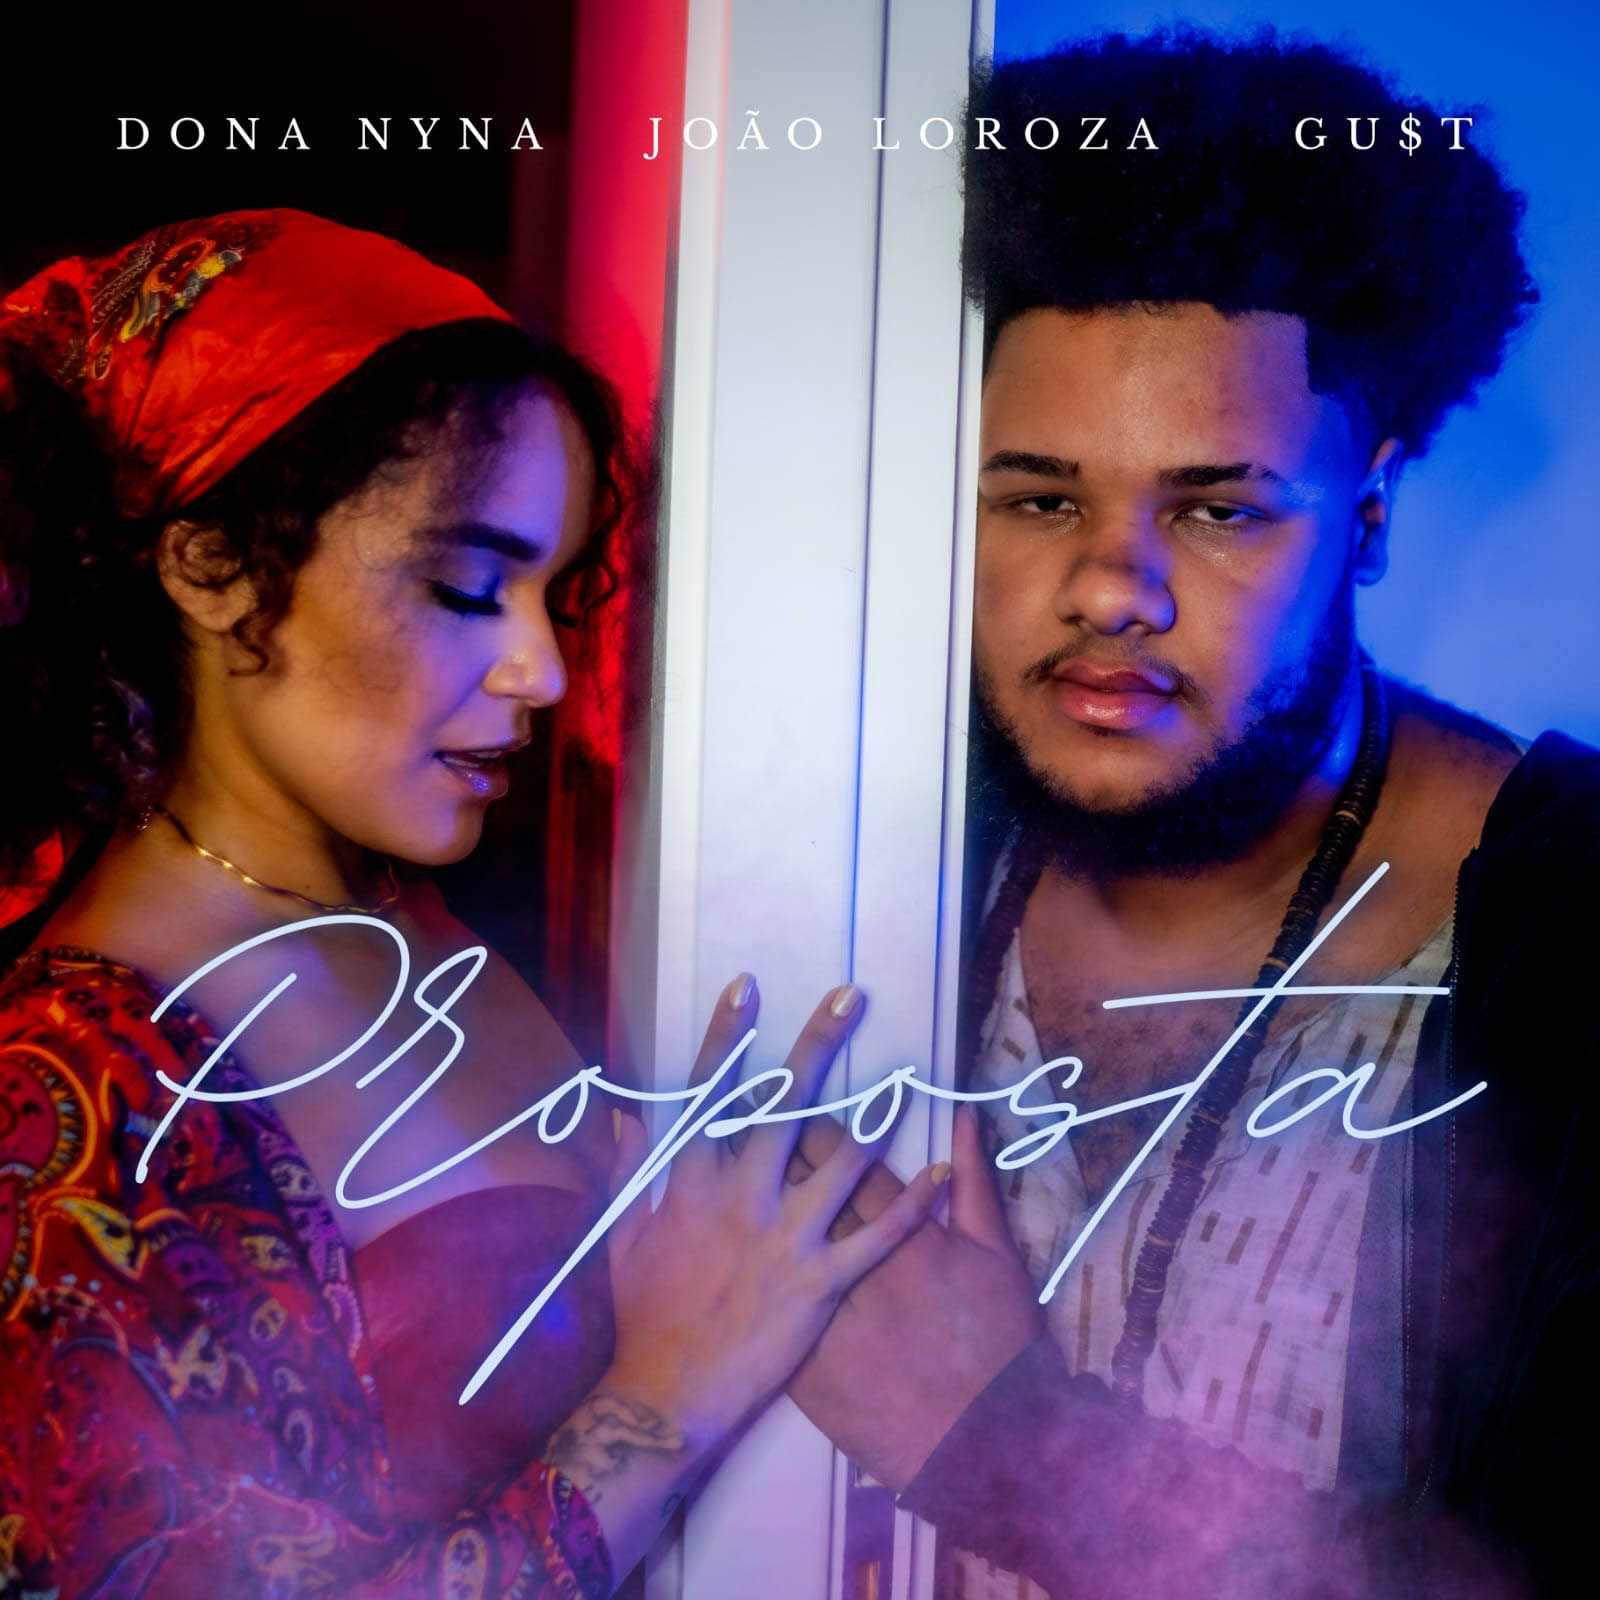 Capa oficial de Proposta - João Loroza feat Dona Nyna e Gust